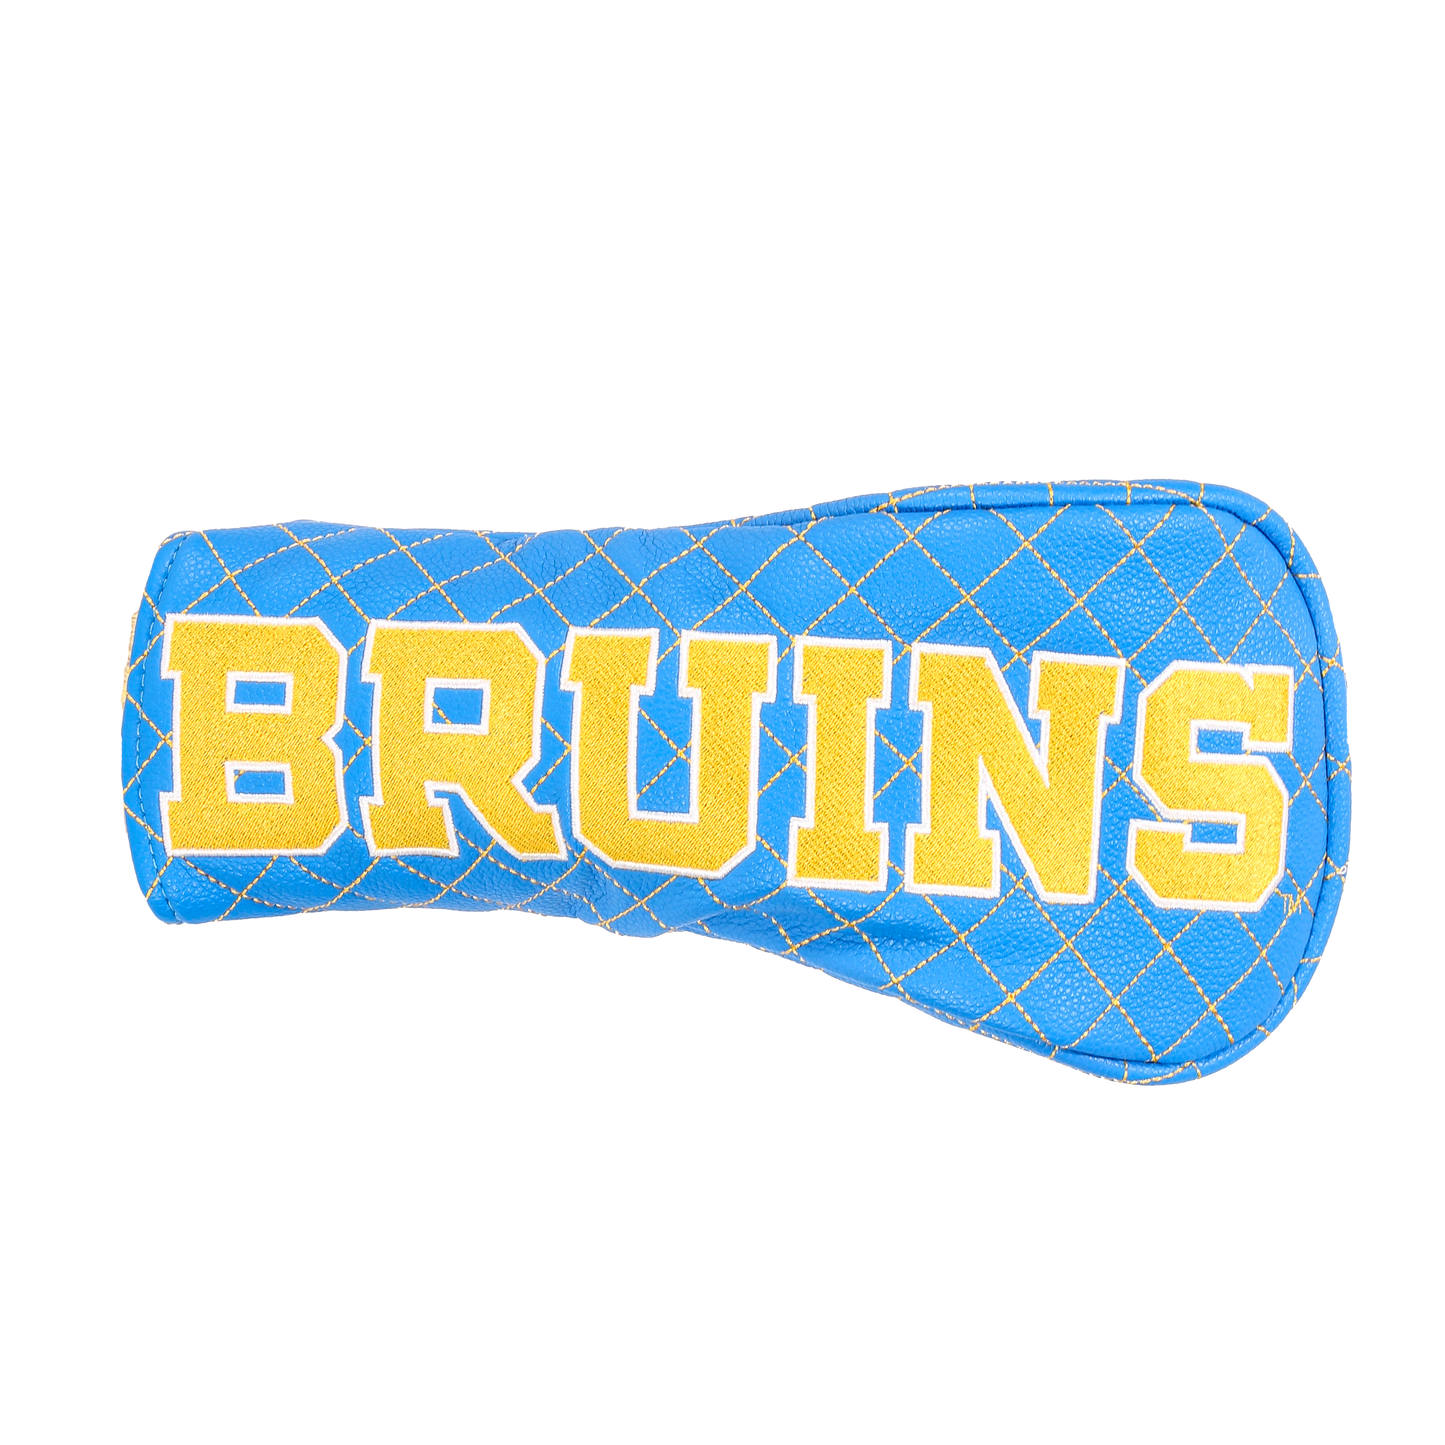 UCLA "Bruins" Fairway Cover